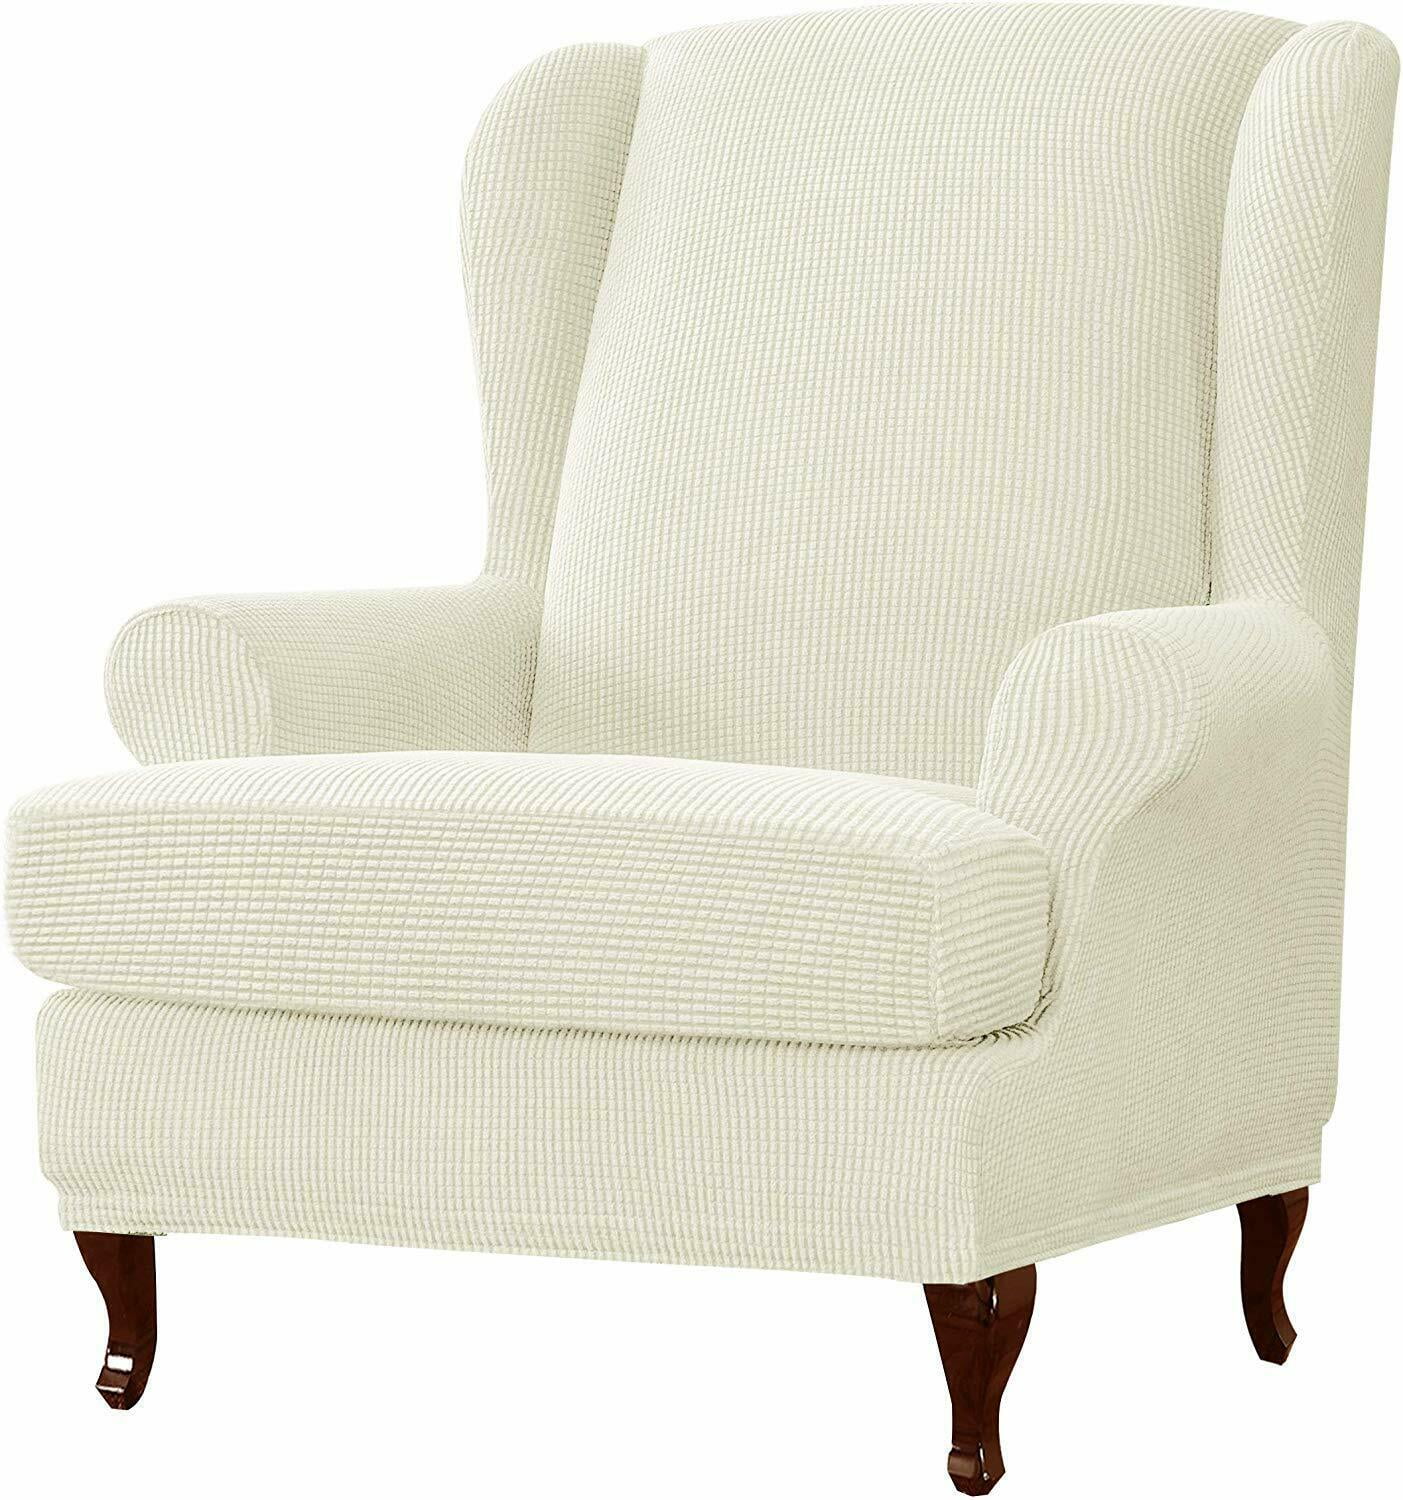 Subtrex Stretch 2 Piece Textured Grid Wingback Chair Slipcover Ivory Walmart Com Walmart Com